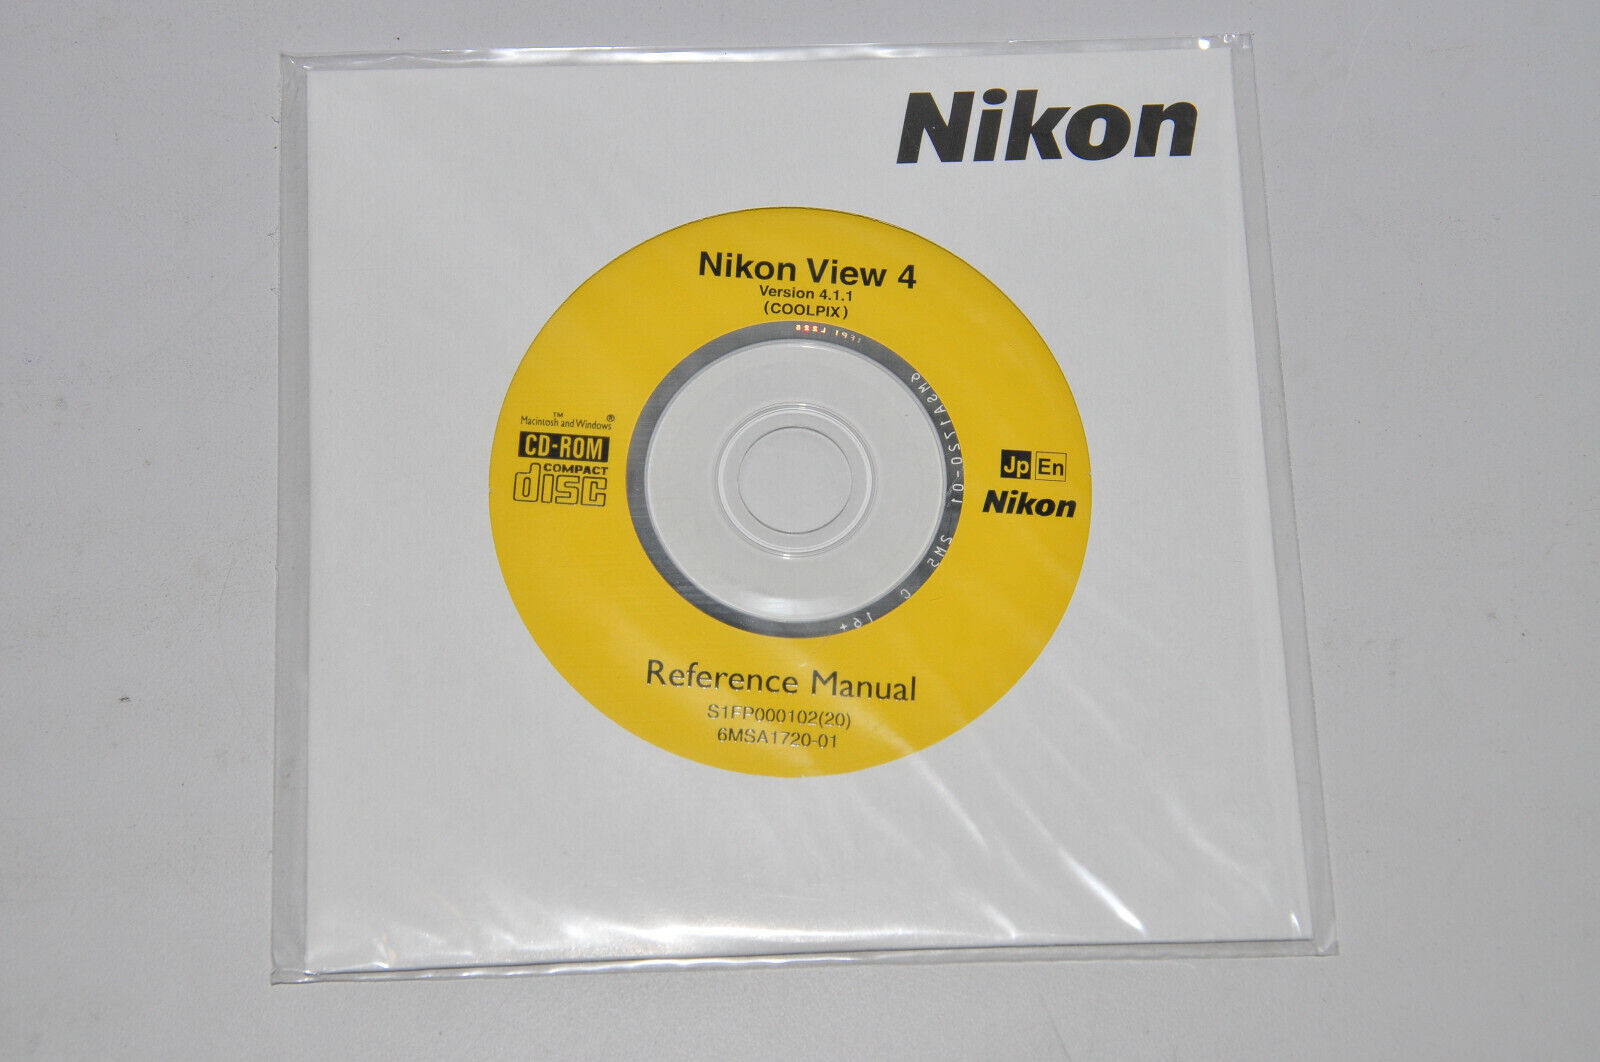 Nikon View 4 CD Rom 4.1.1 - CD Disc - NEW